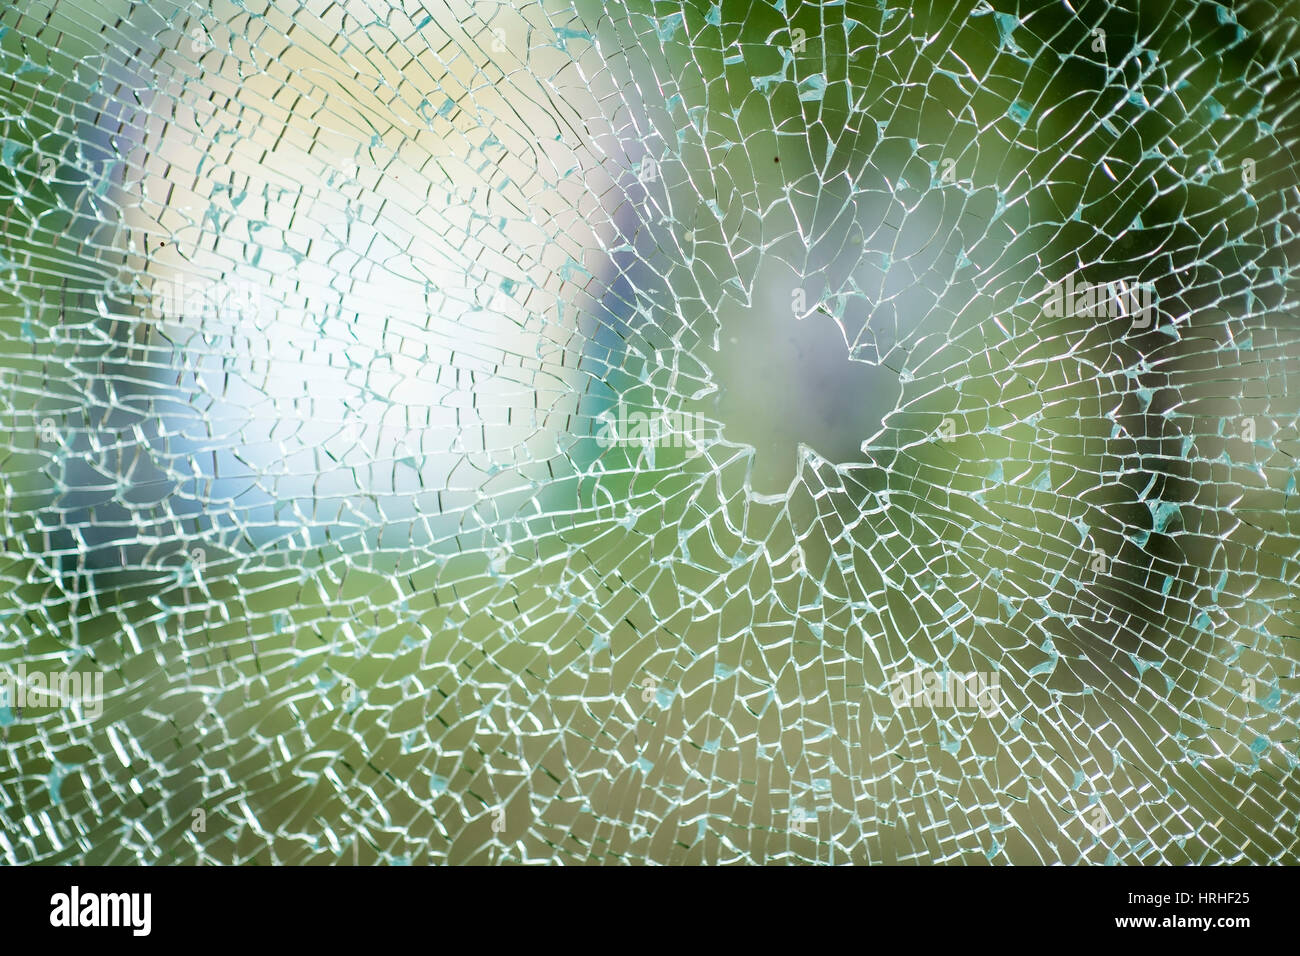 Kaputte Glasscheibe - broken glass Stock Photo